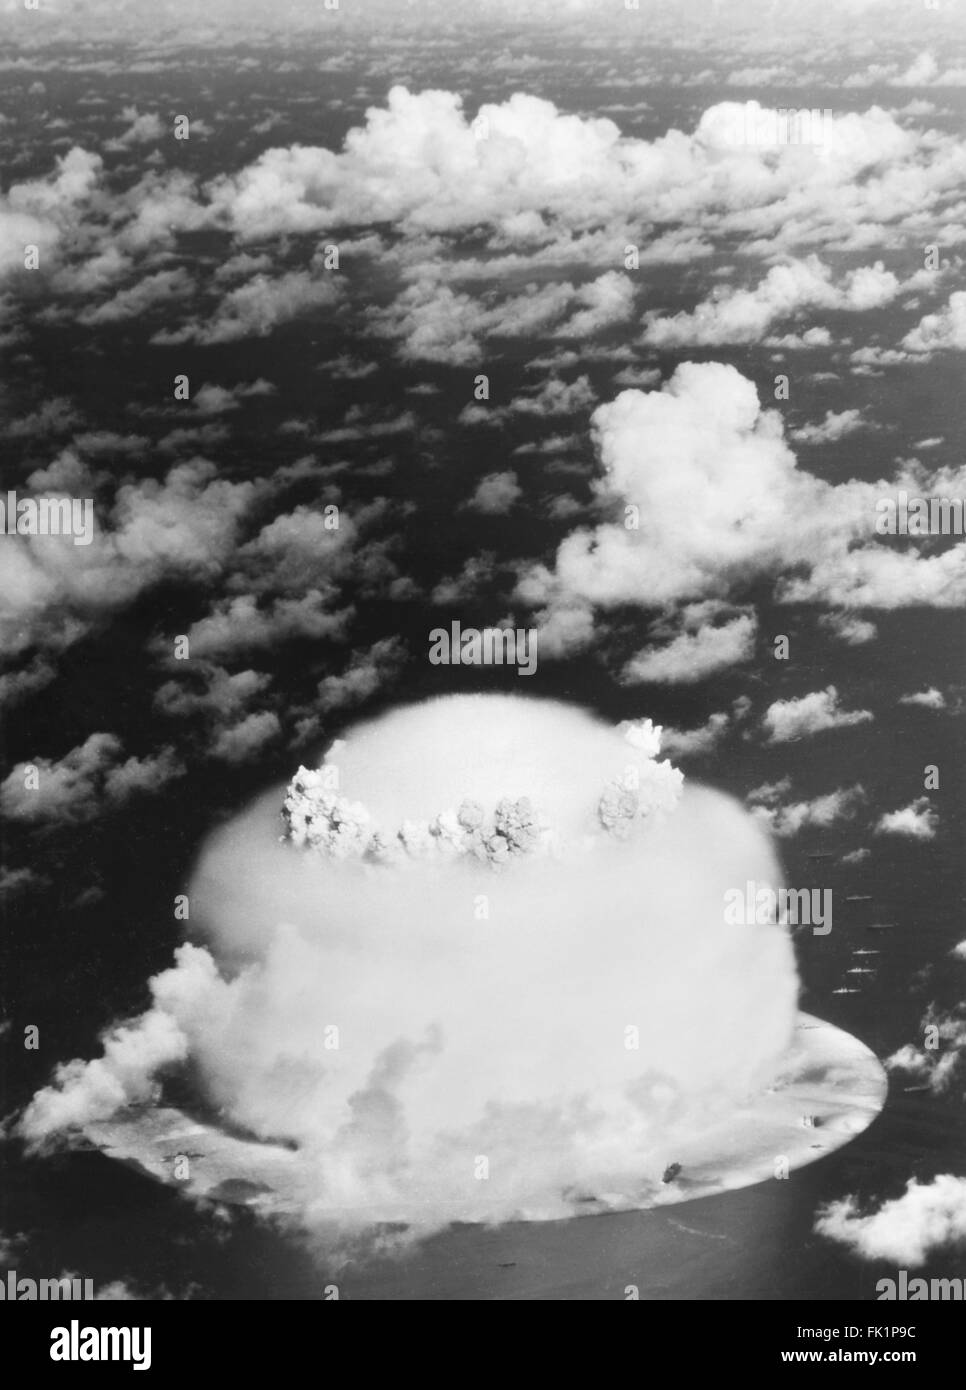 Atompilz von Operation Crossroads Atomwaffen Test am Bikini-Atoll, Marshall-Inseln, Pazifik im Juli/August 1946. Stockfoto